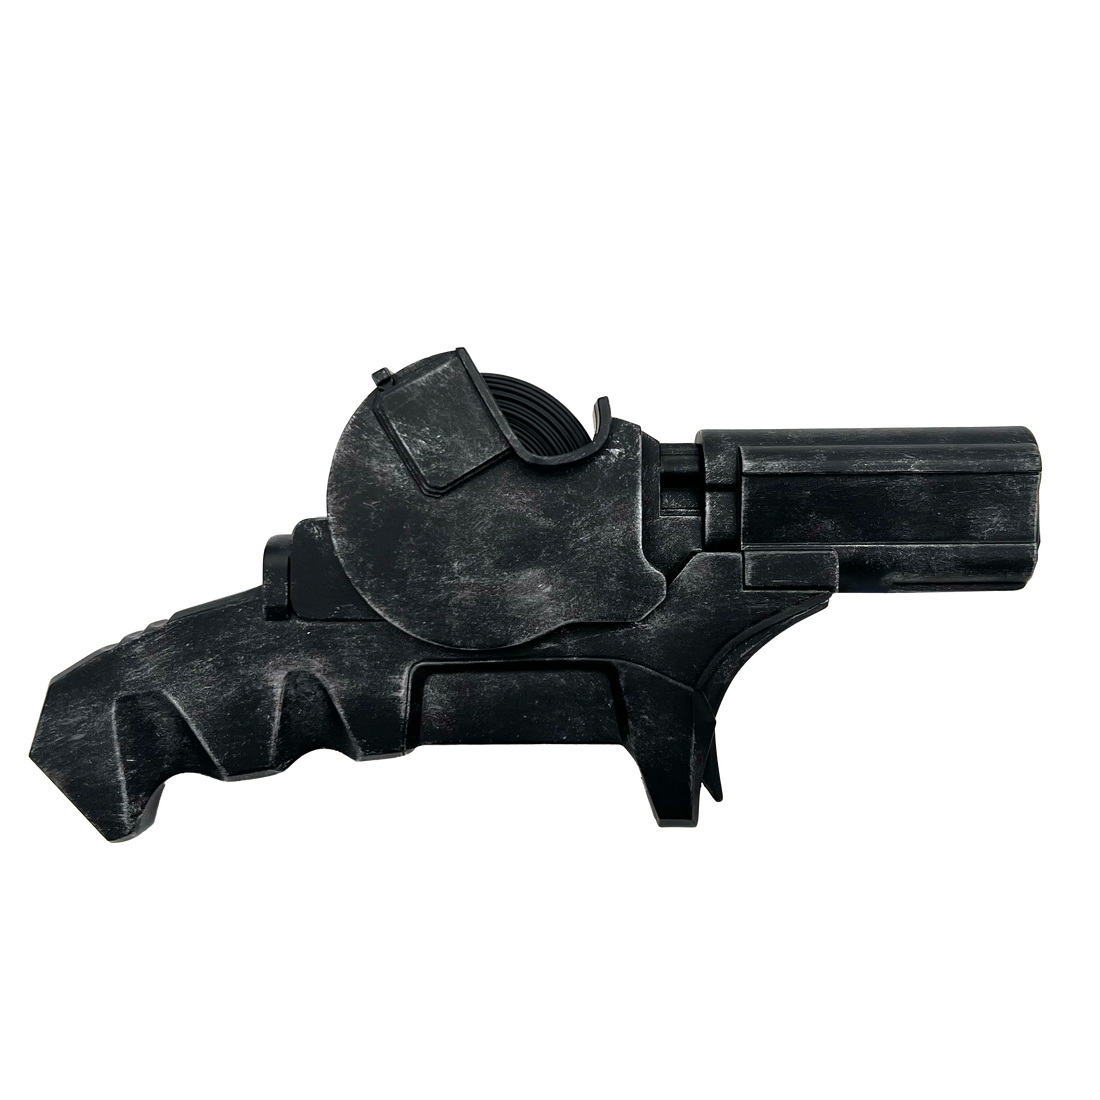 Batman Grapple Gun Grappling Hook Weapon Prop Toy